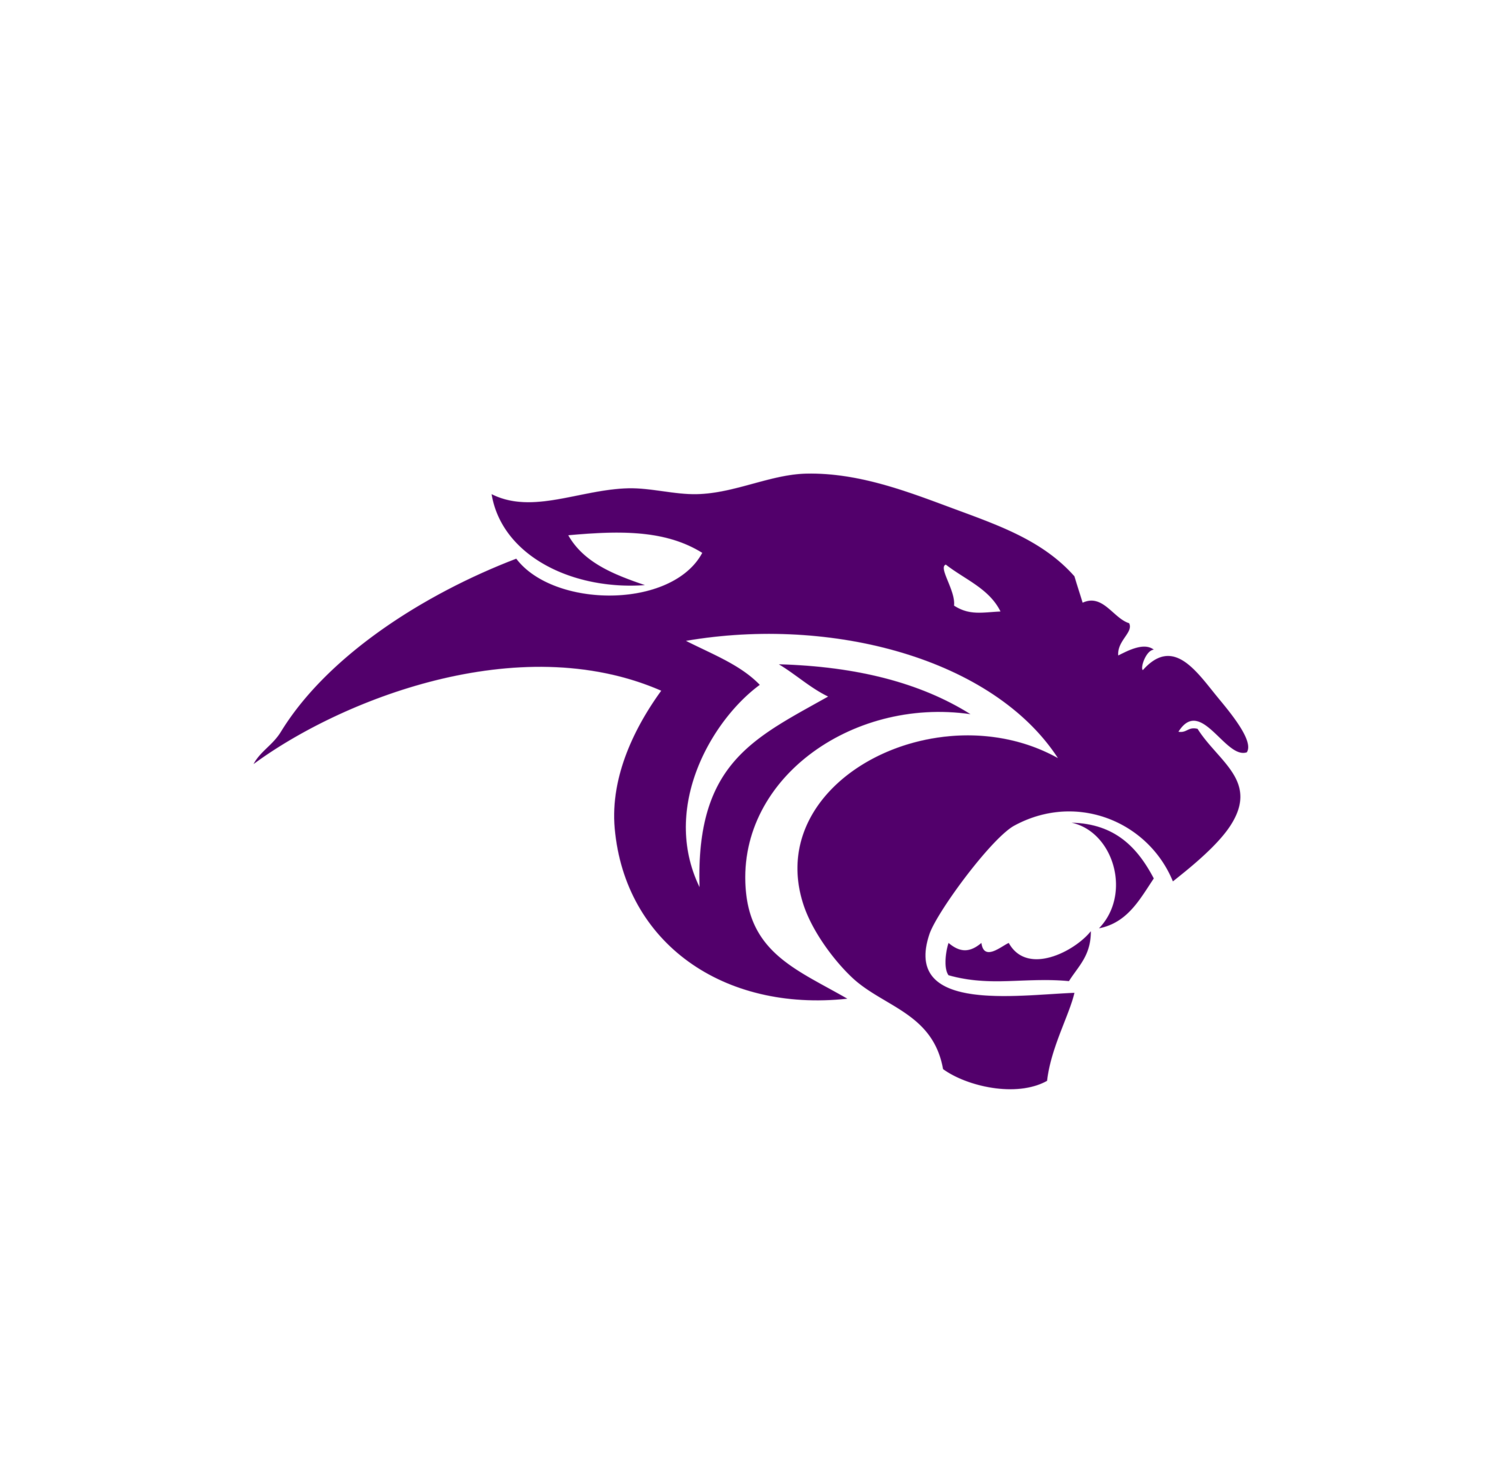 Ridge Point Band